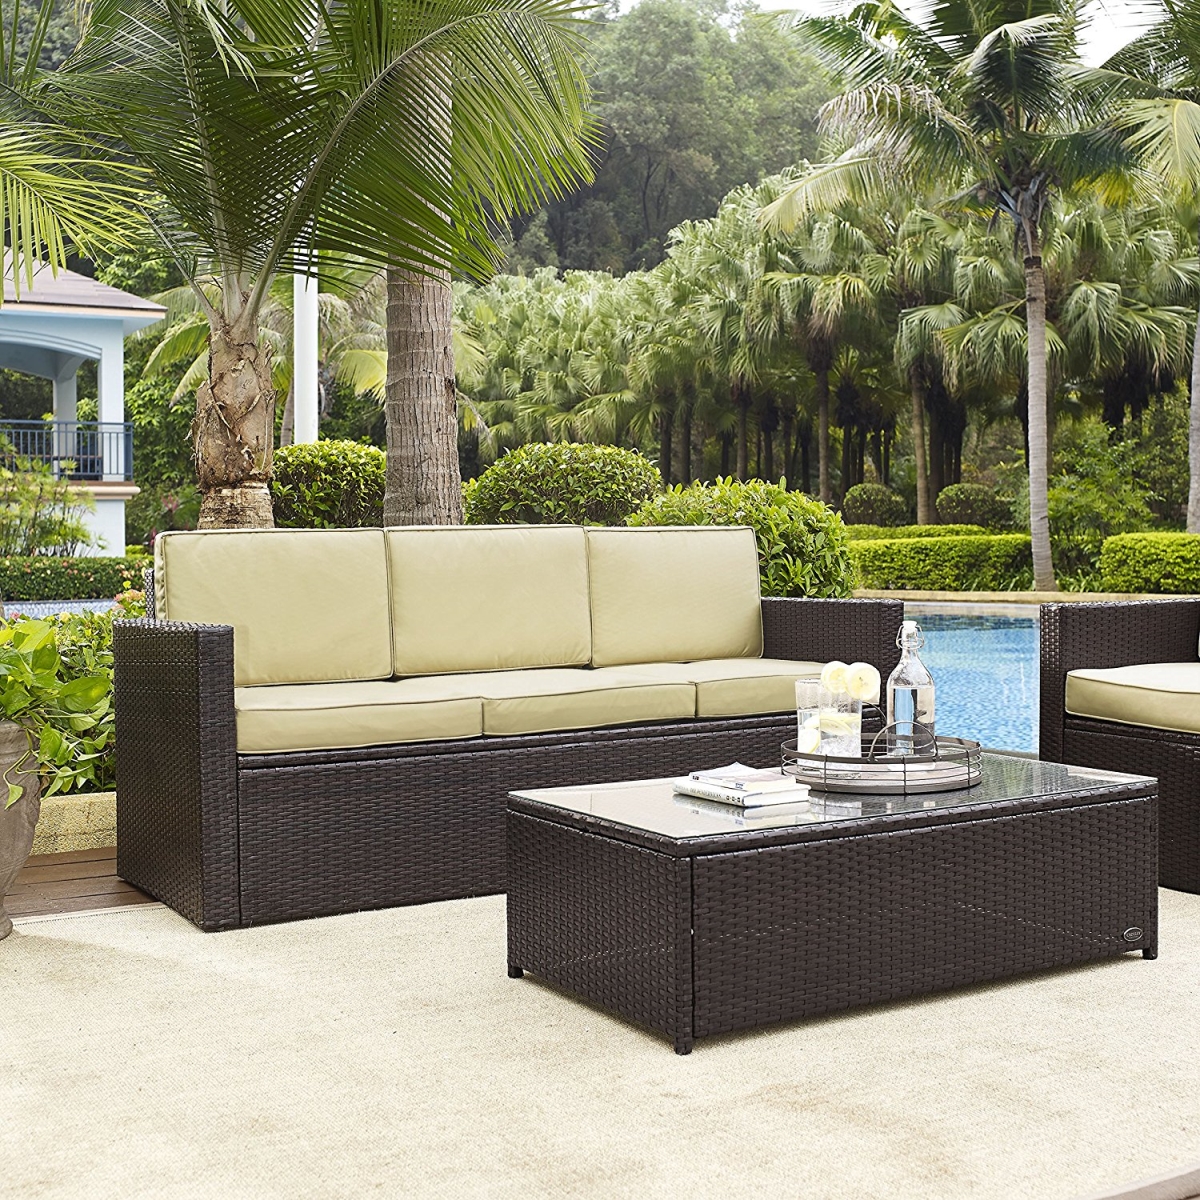 Ko70048br-sa Palm Harbor Wicker Patio Sofa, Brown With Sand Cushion